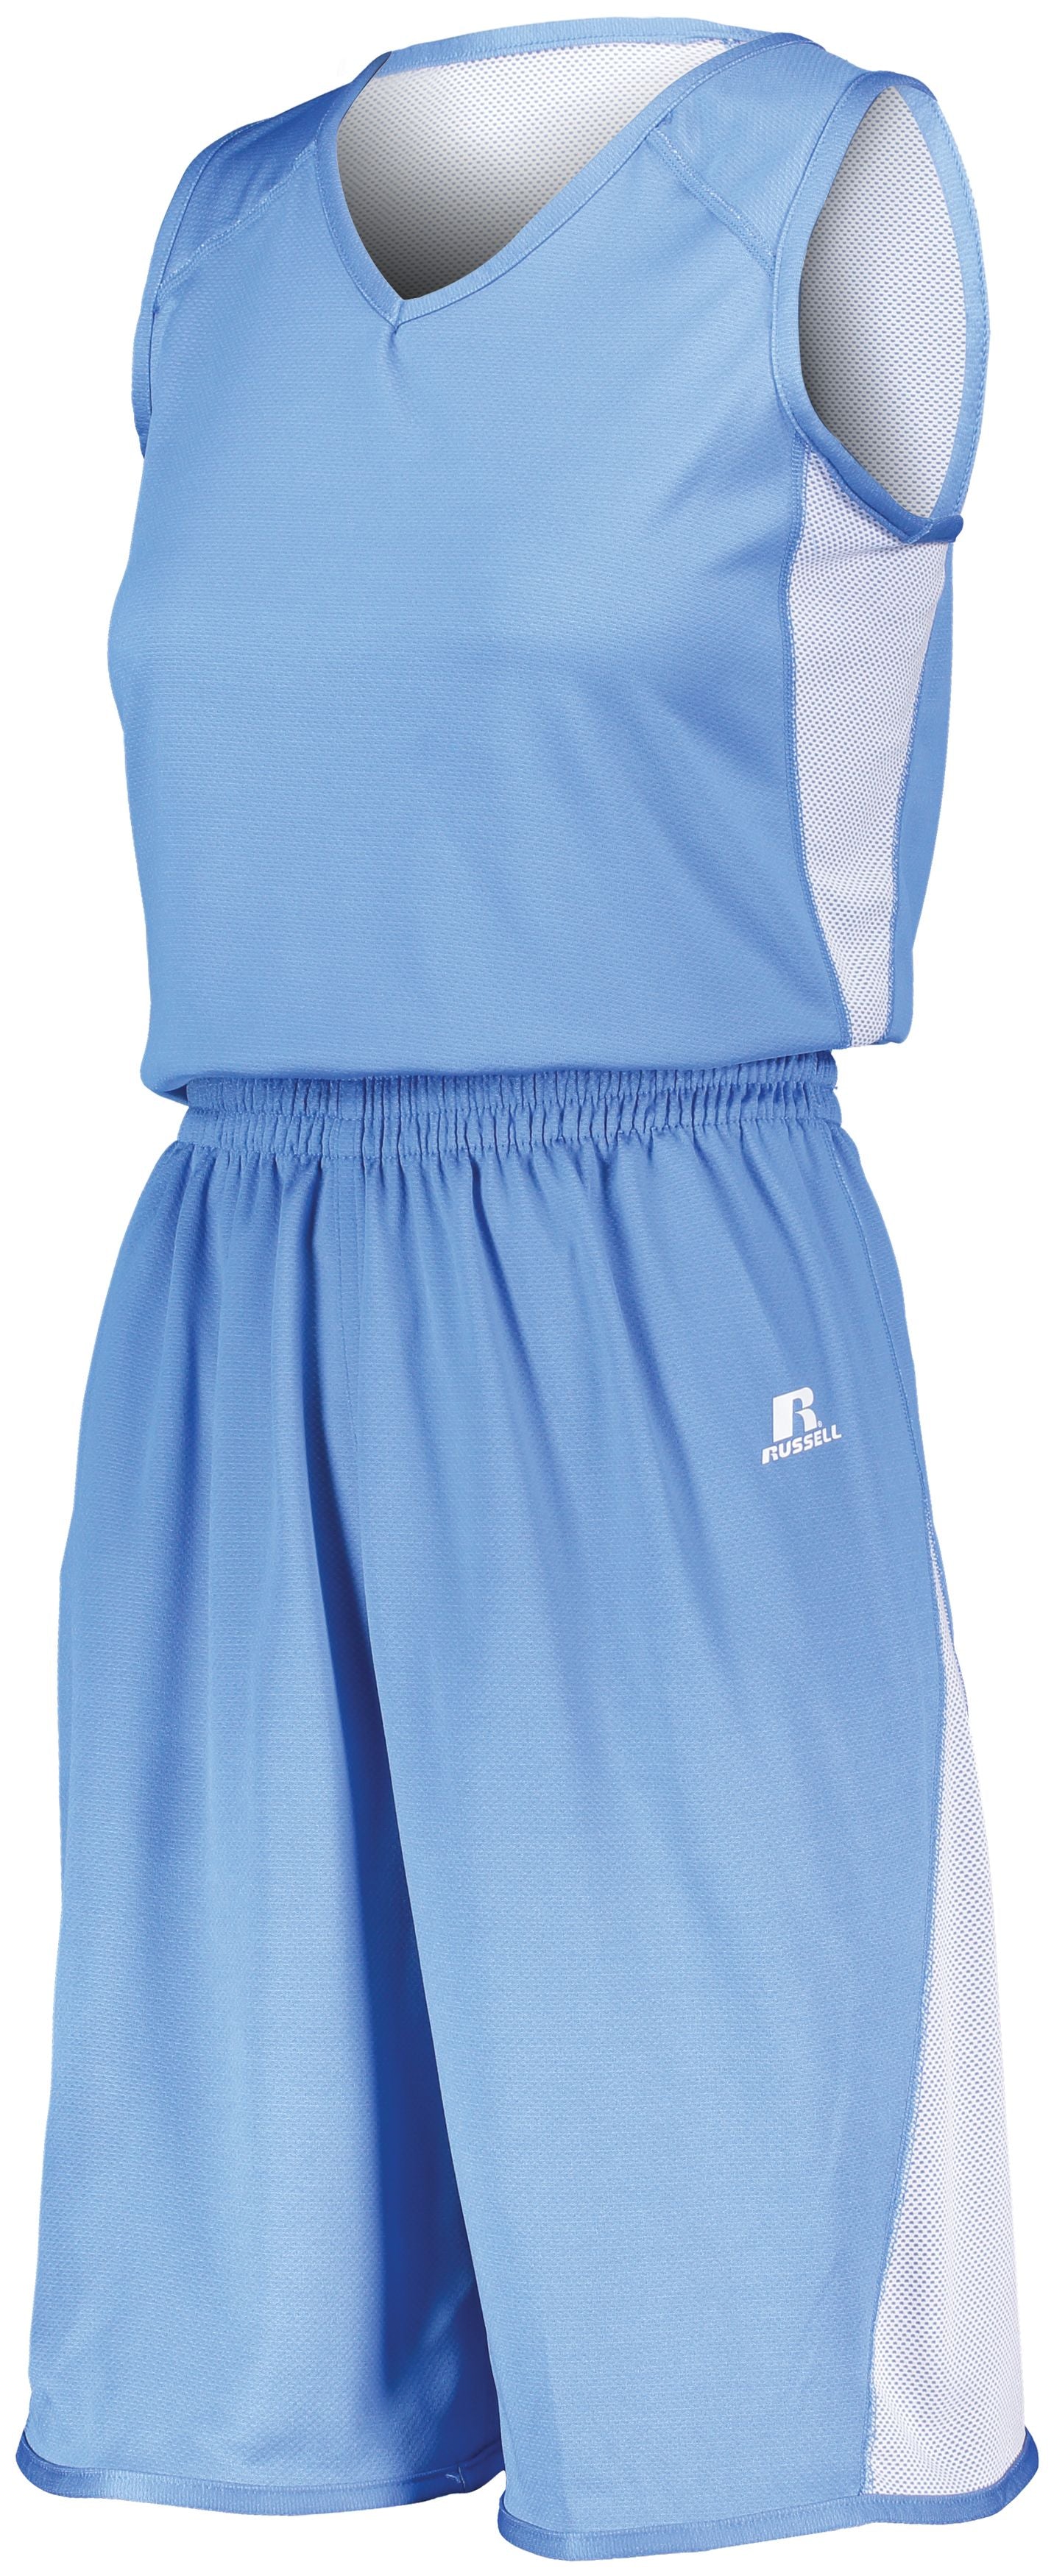 Champro Clutch Adult Reversible Basketball Jersey - S / Light Blue/White